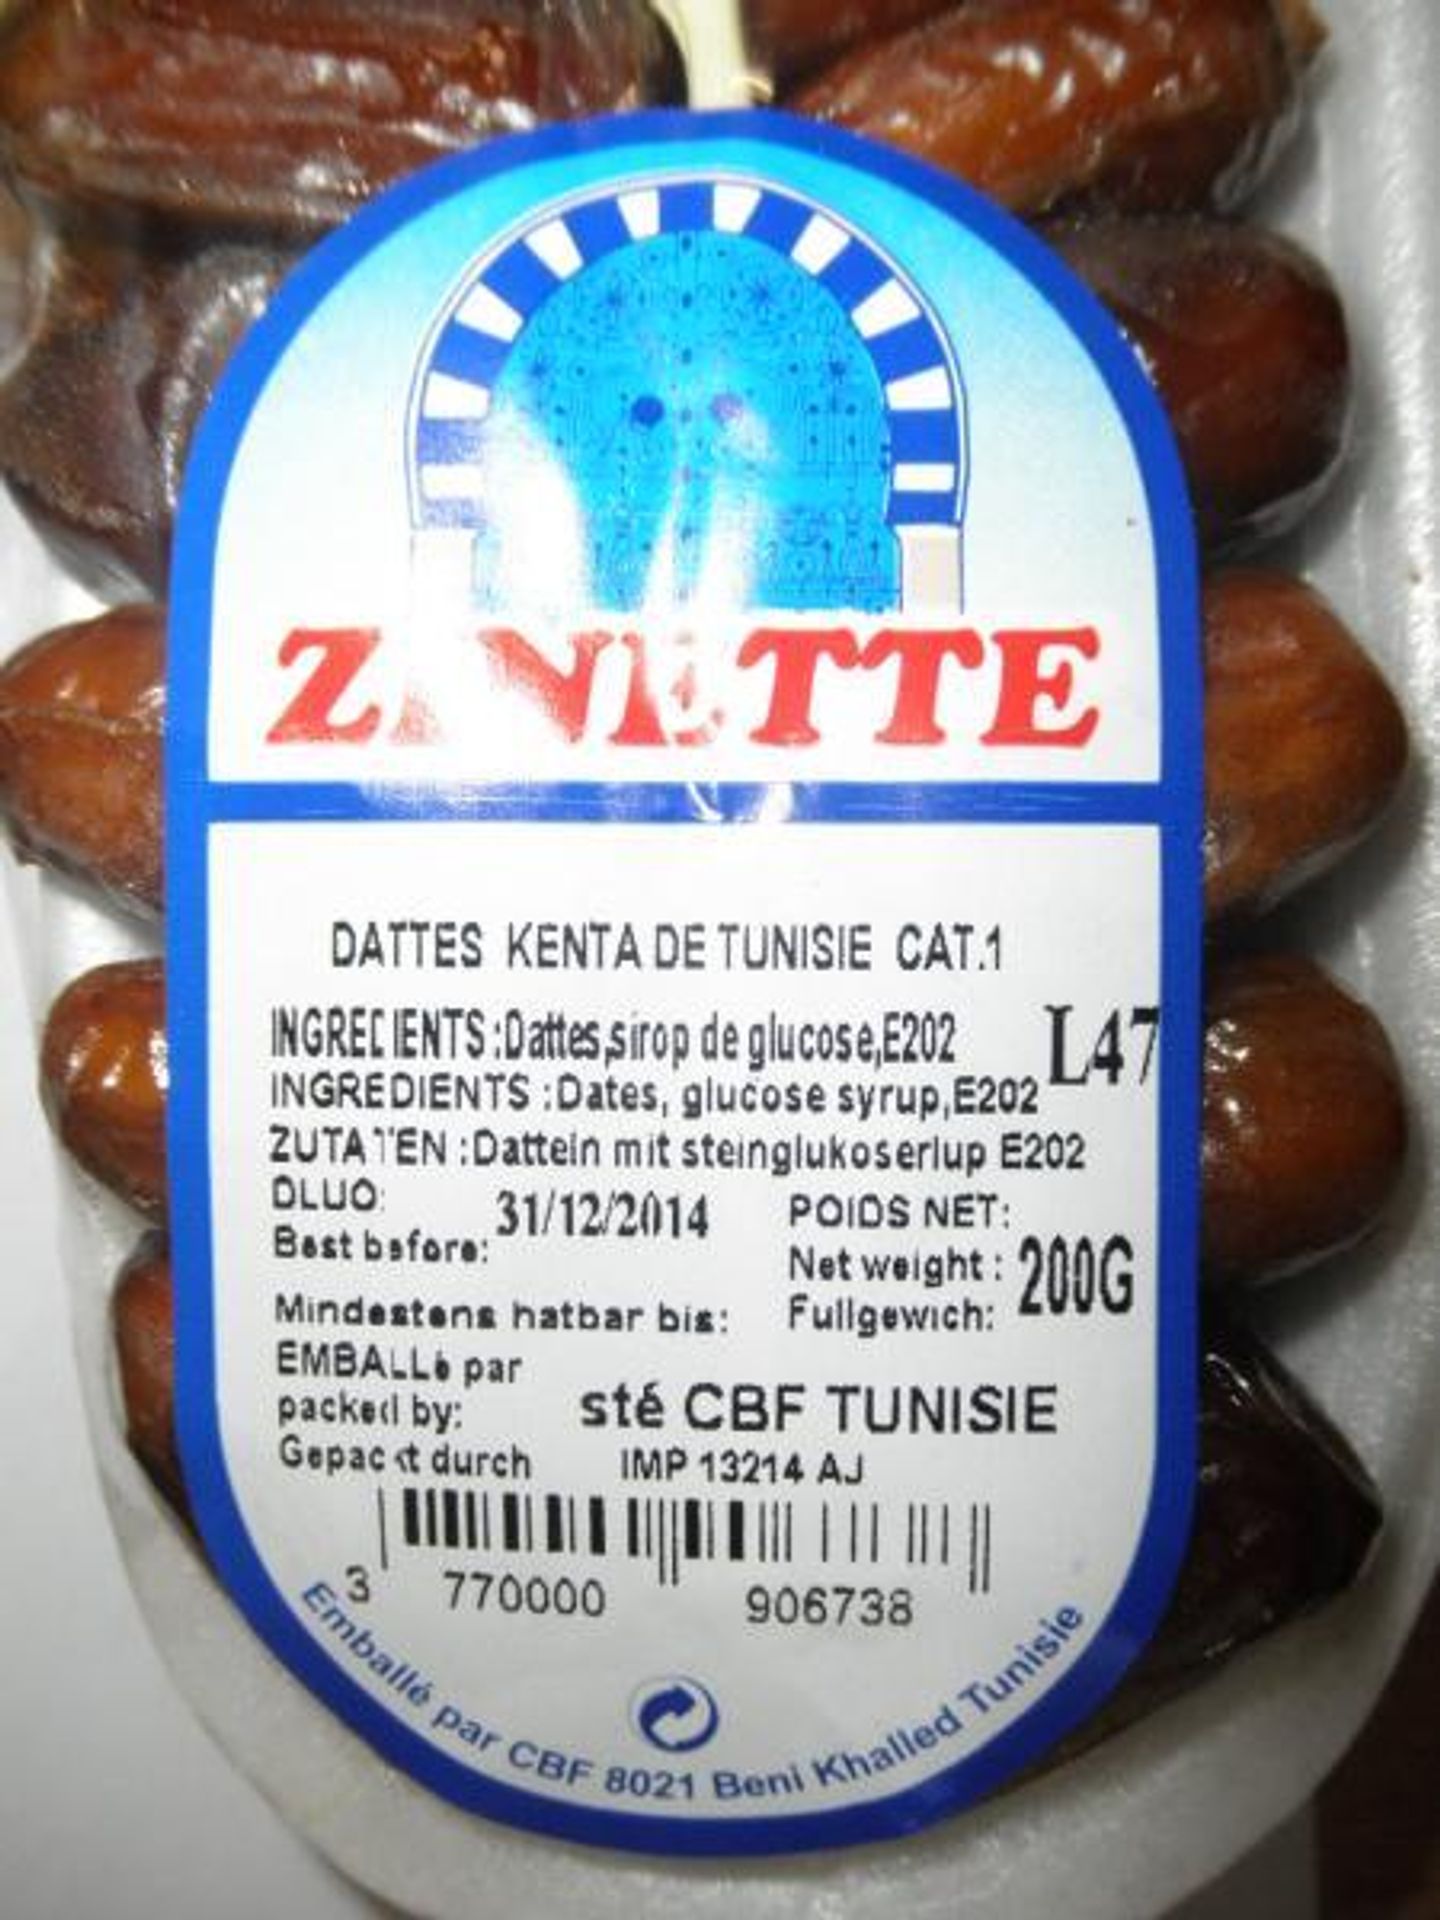 Tesco: Dattes Kenta De Tunisie - datle proslazené (Zinette) - 2 - GALERIE: Tesco: Dattes Kenta De Tunisie - datle proslazené (Zinette) (1/4)